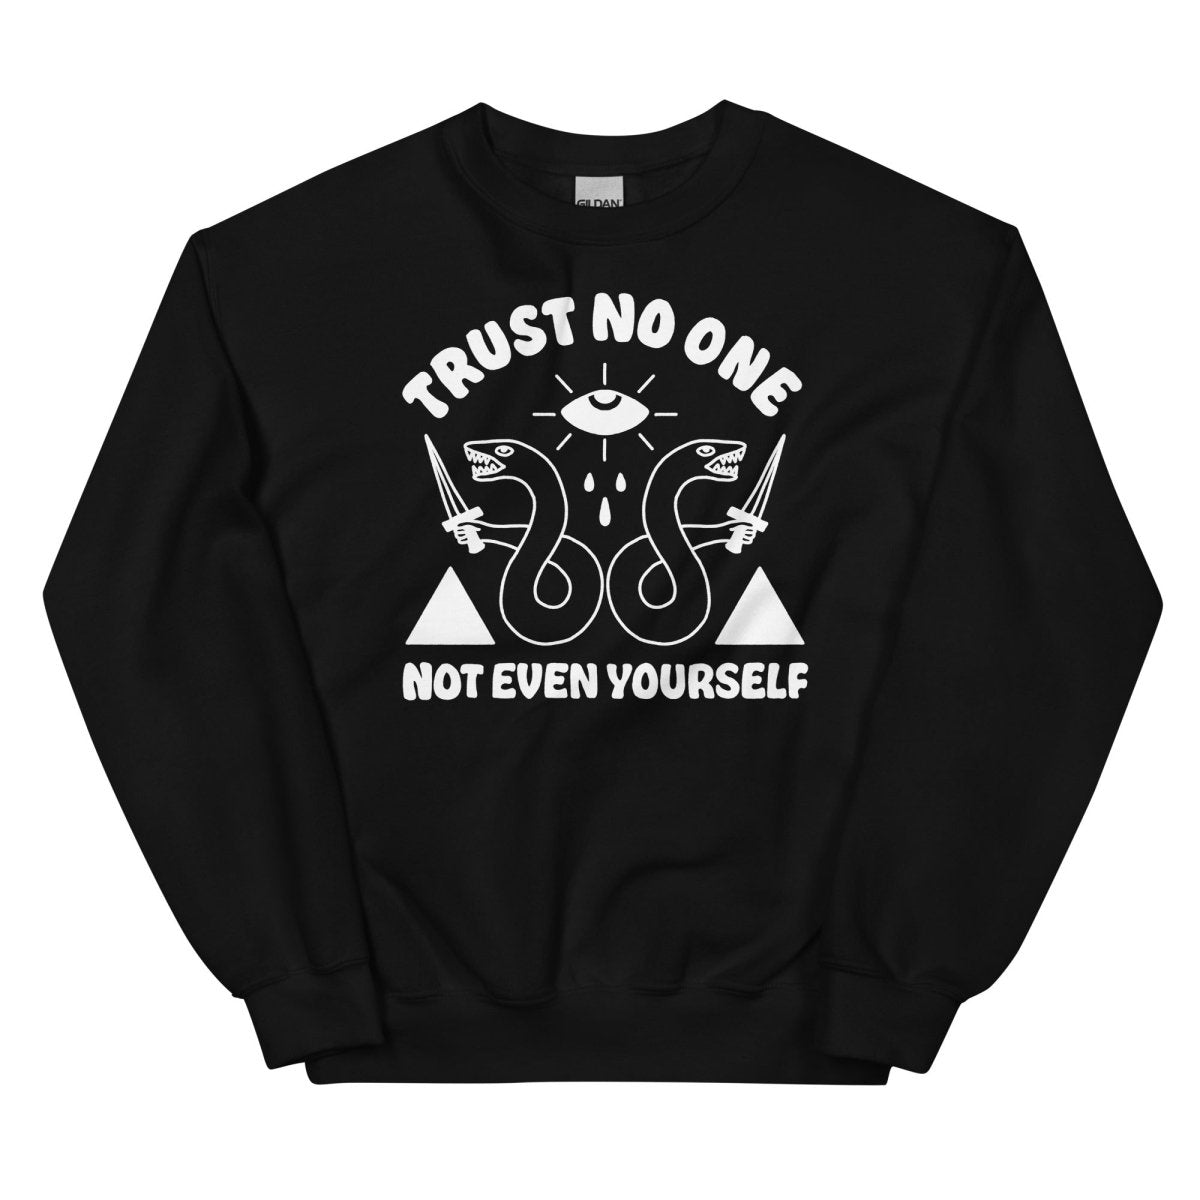 Trust no one sweatshirt - Pretty Bad Co.